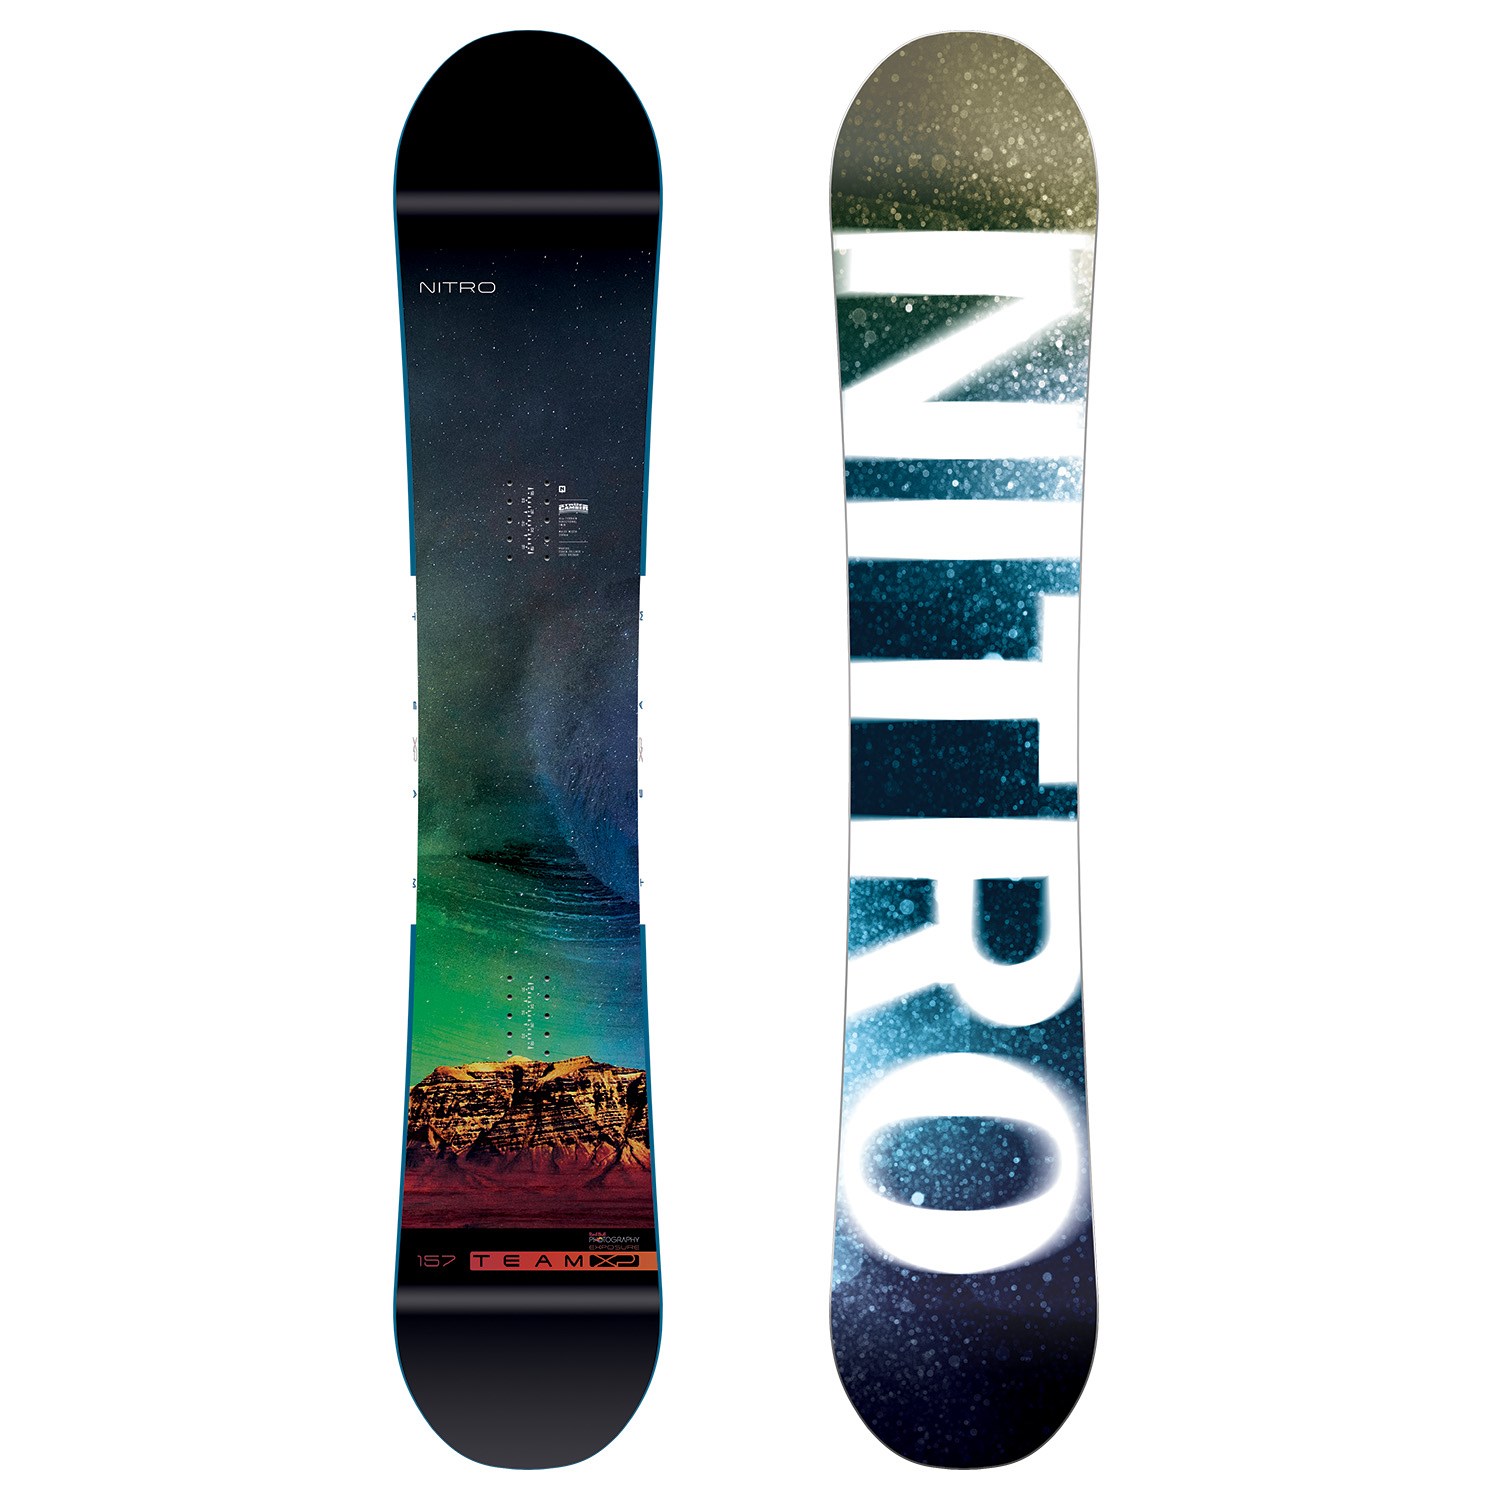 Ongewijzigd sociaal Voorlopige Nitro Team Exposure Snowboard 2019 | evo